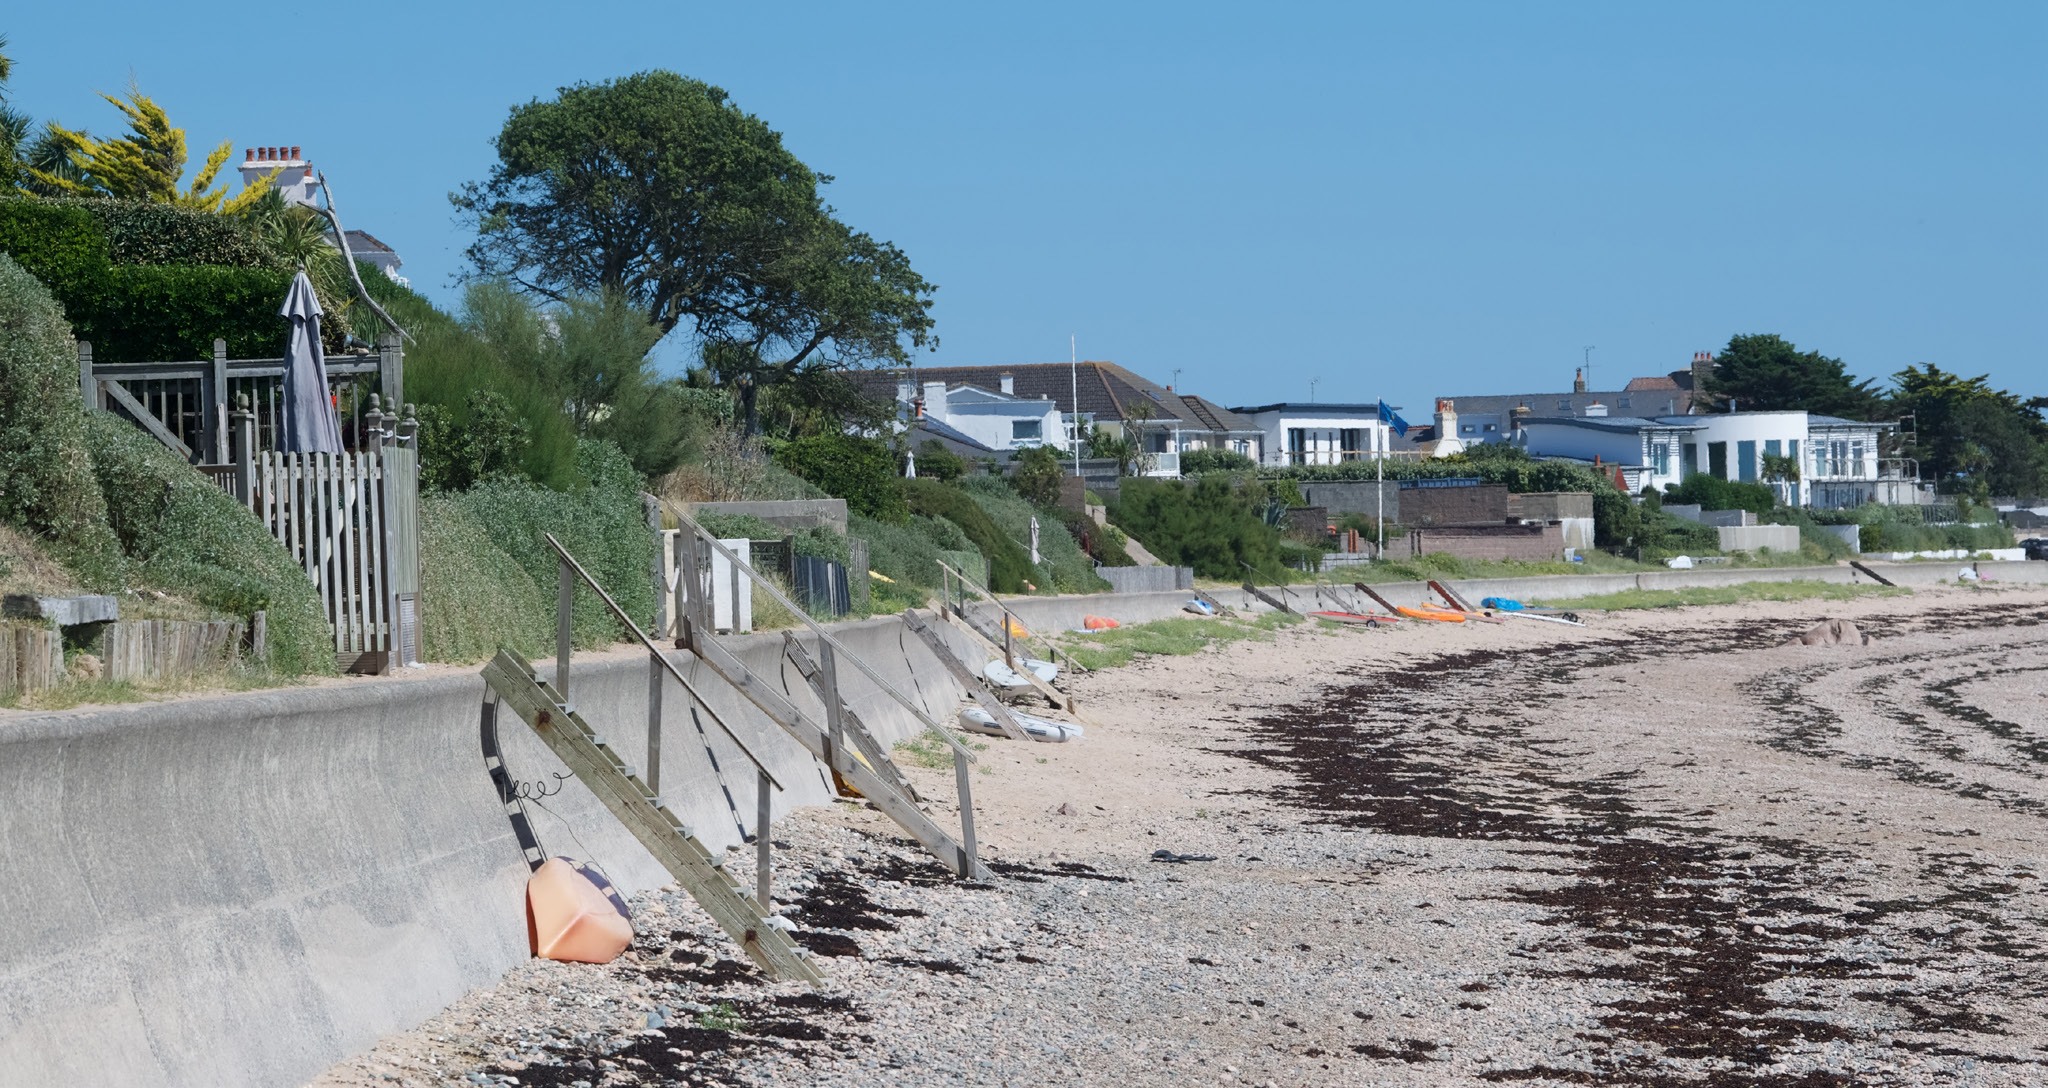 Jersey properties bordering shoreline - Foreshore issues